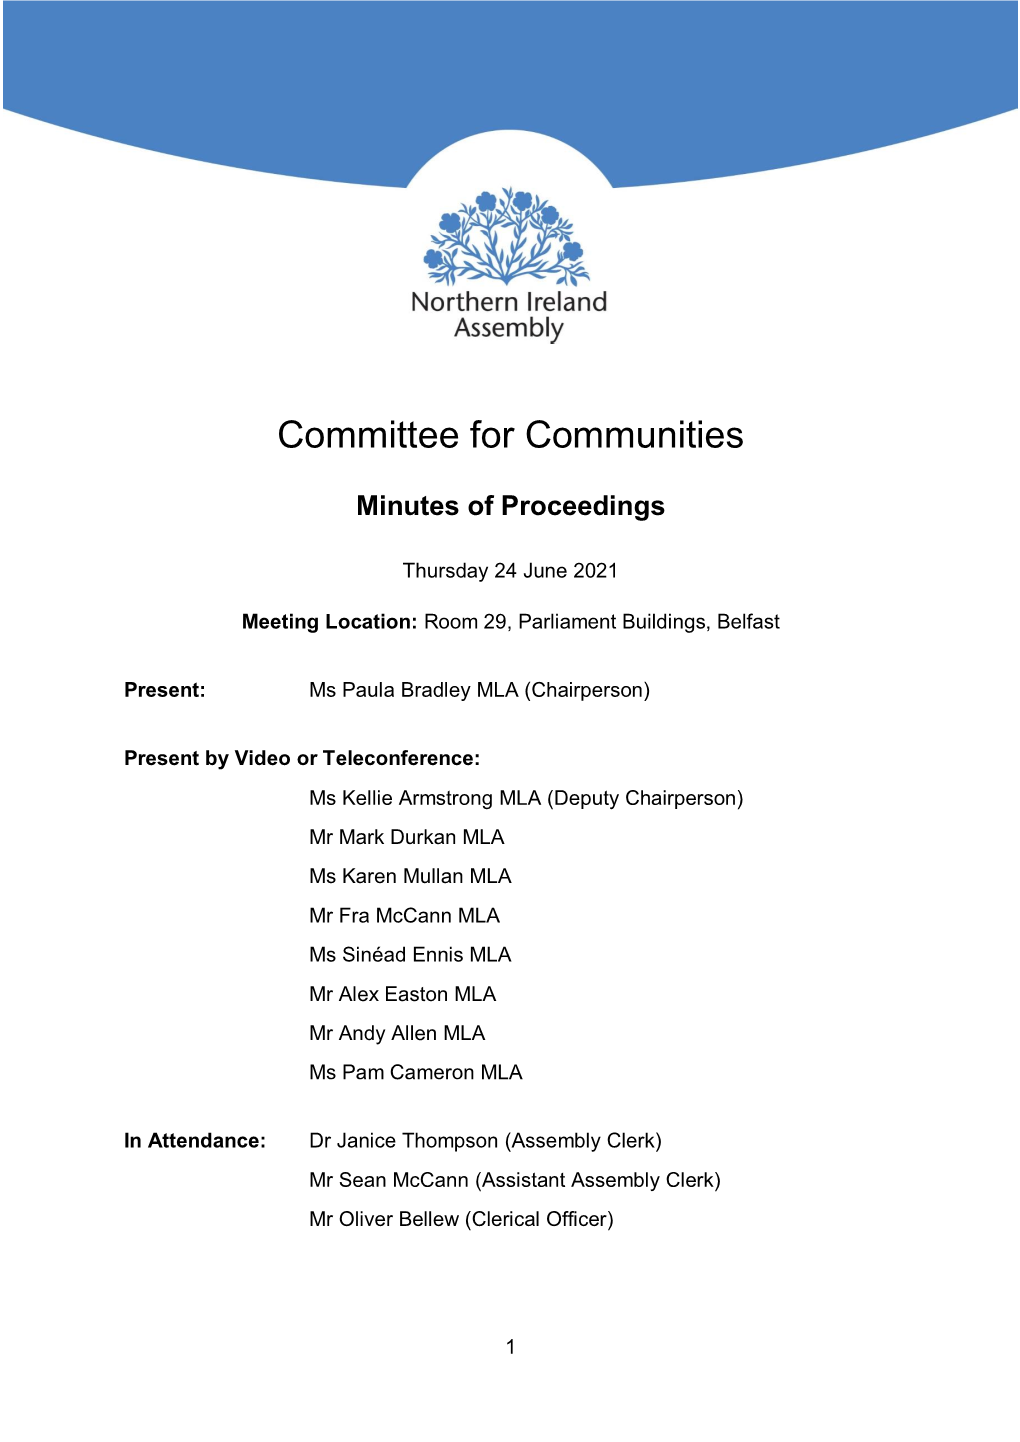 Committee for Communities Meeting Minutes of Proceedings 24 June 2021